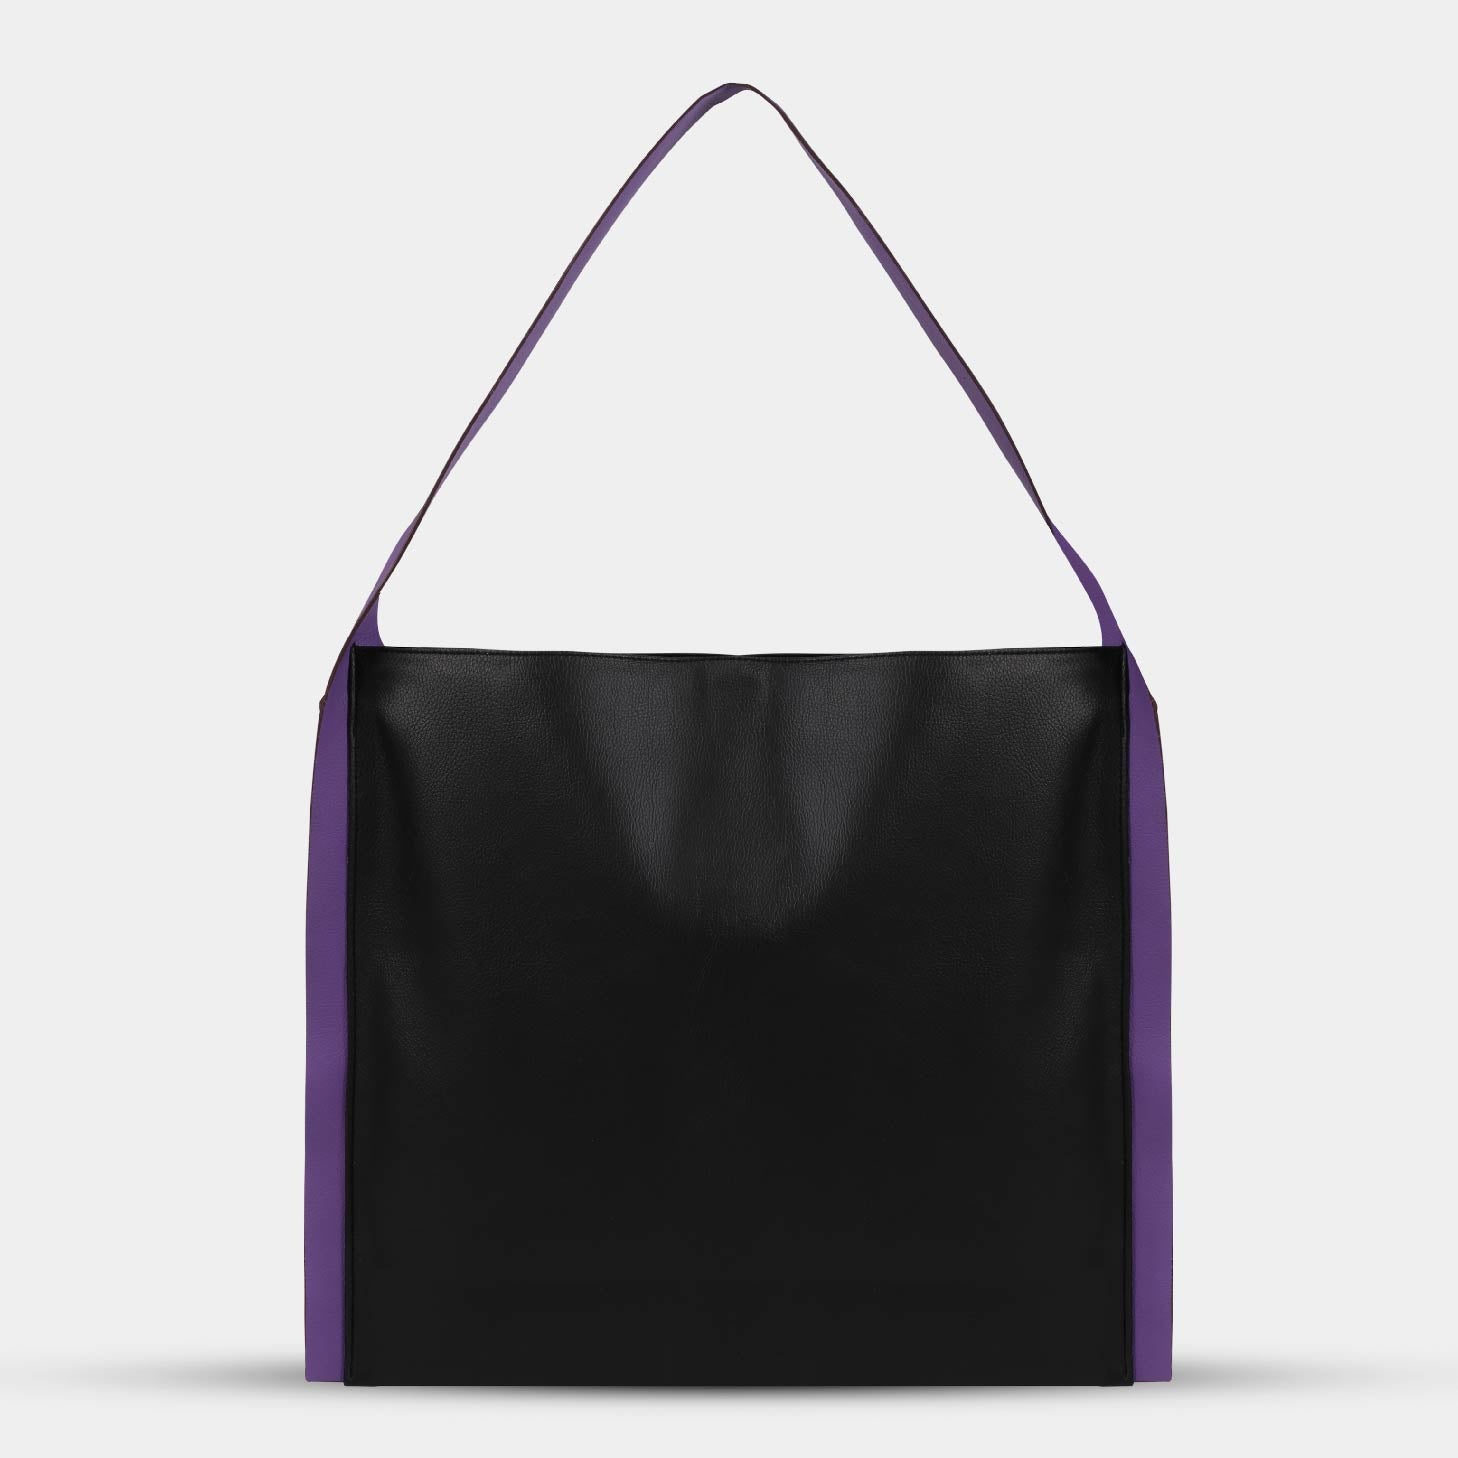 Black and purple PAPER TOTE bag